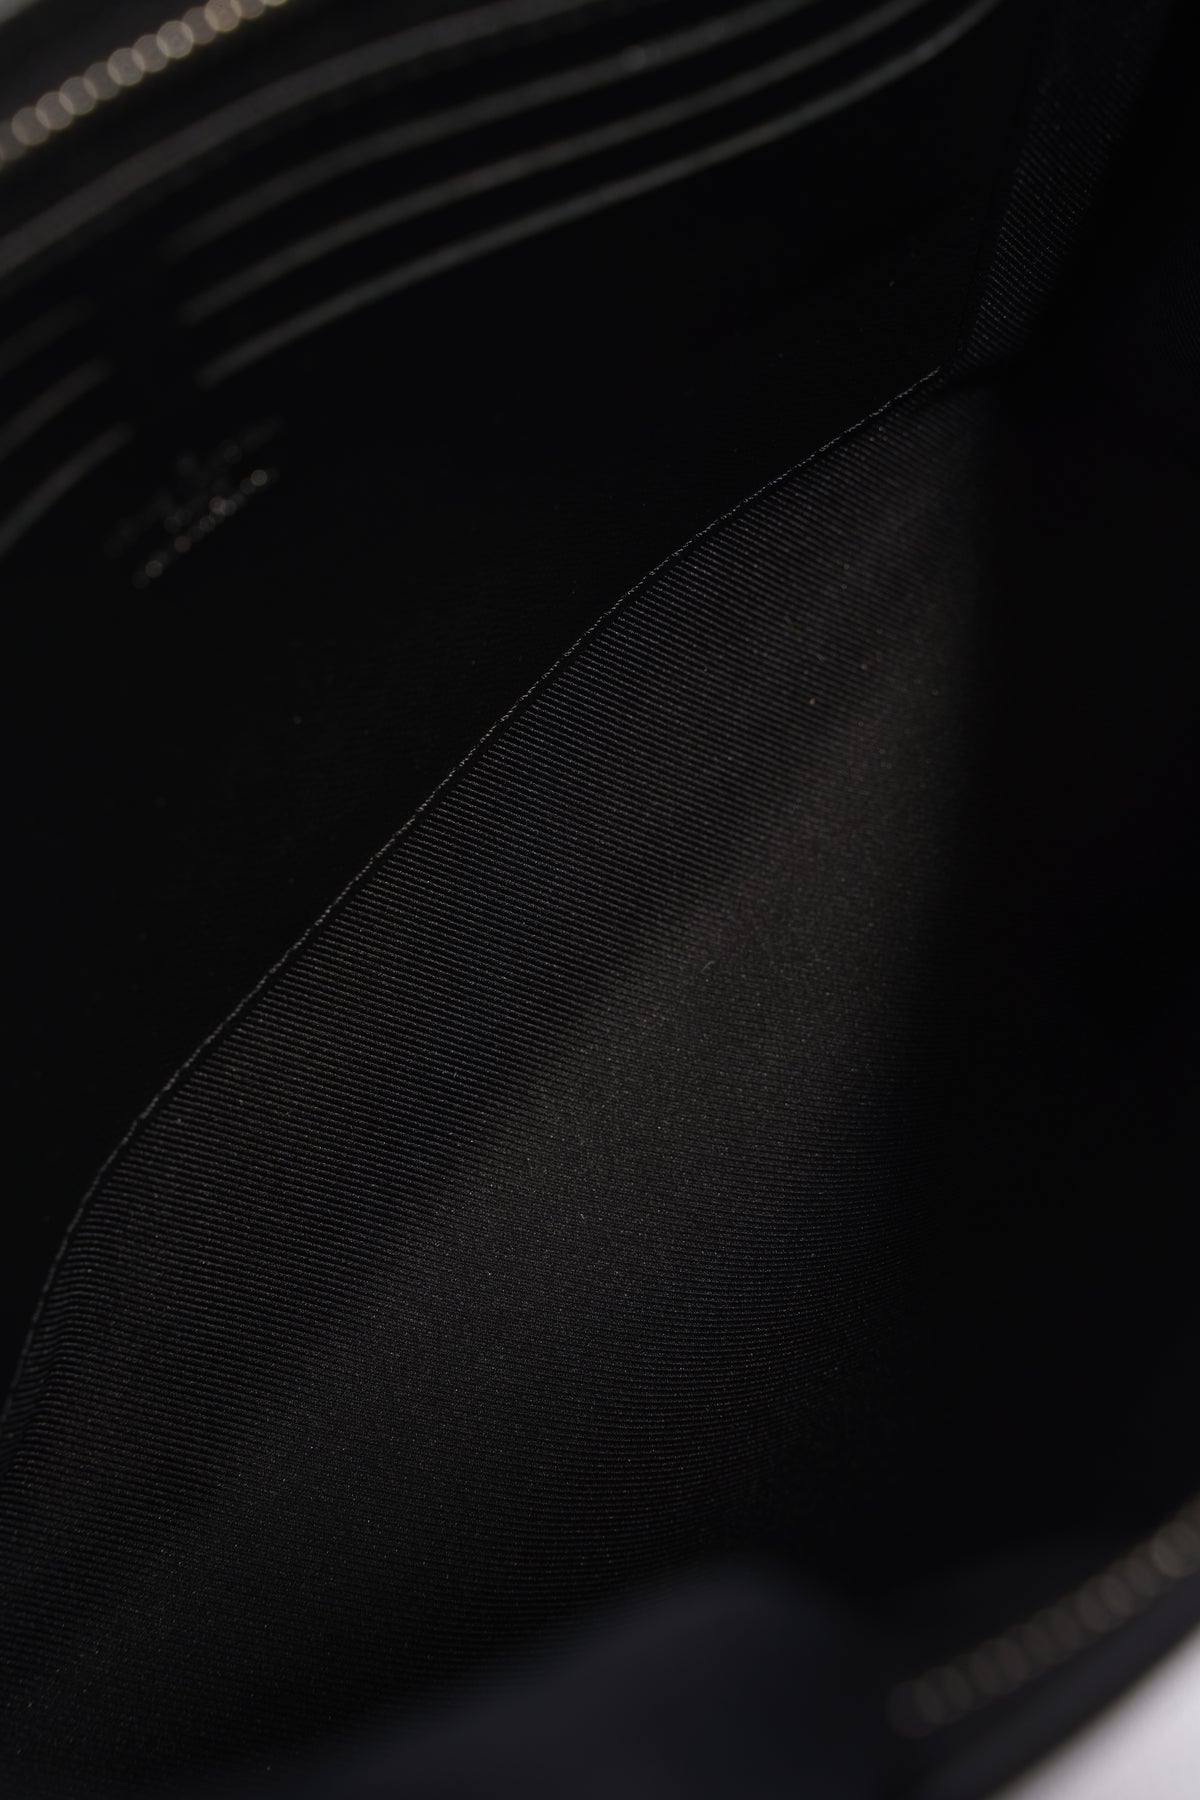 Louis Vuitton - Authenticated Pochette Voyage Small Bag - Leather Black Plain for Men, Very Good Condition